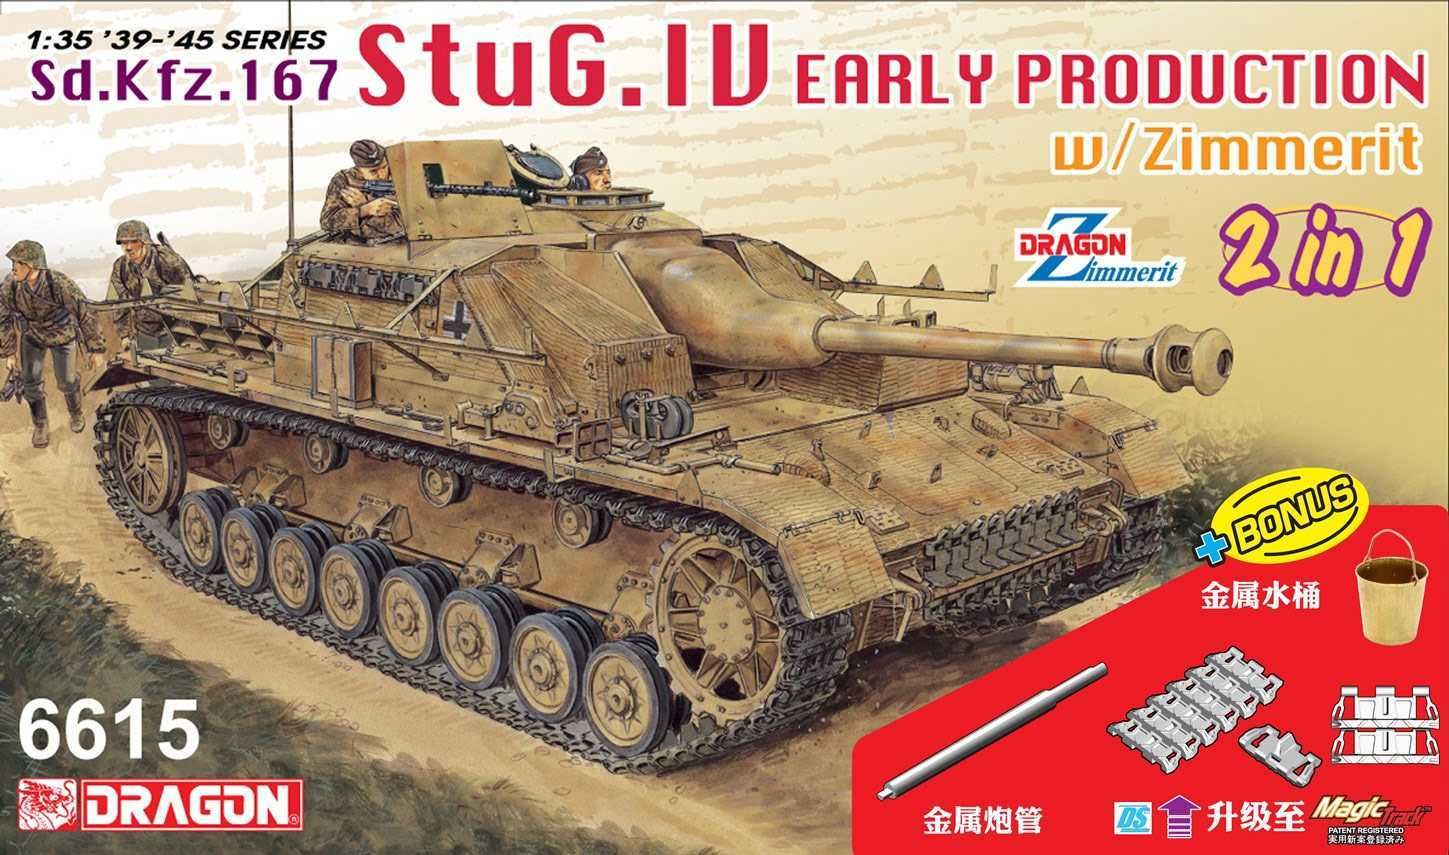 DRAGON Model Kit tank 6615 - StuG.IV Early Production (2 in 1) (1:35) - obrázek 1